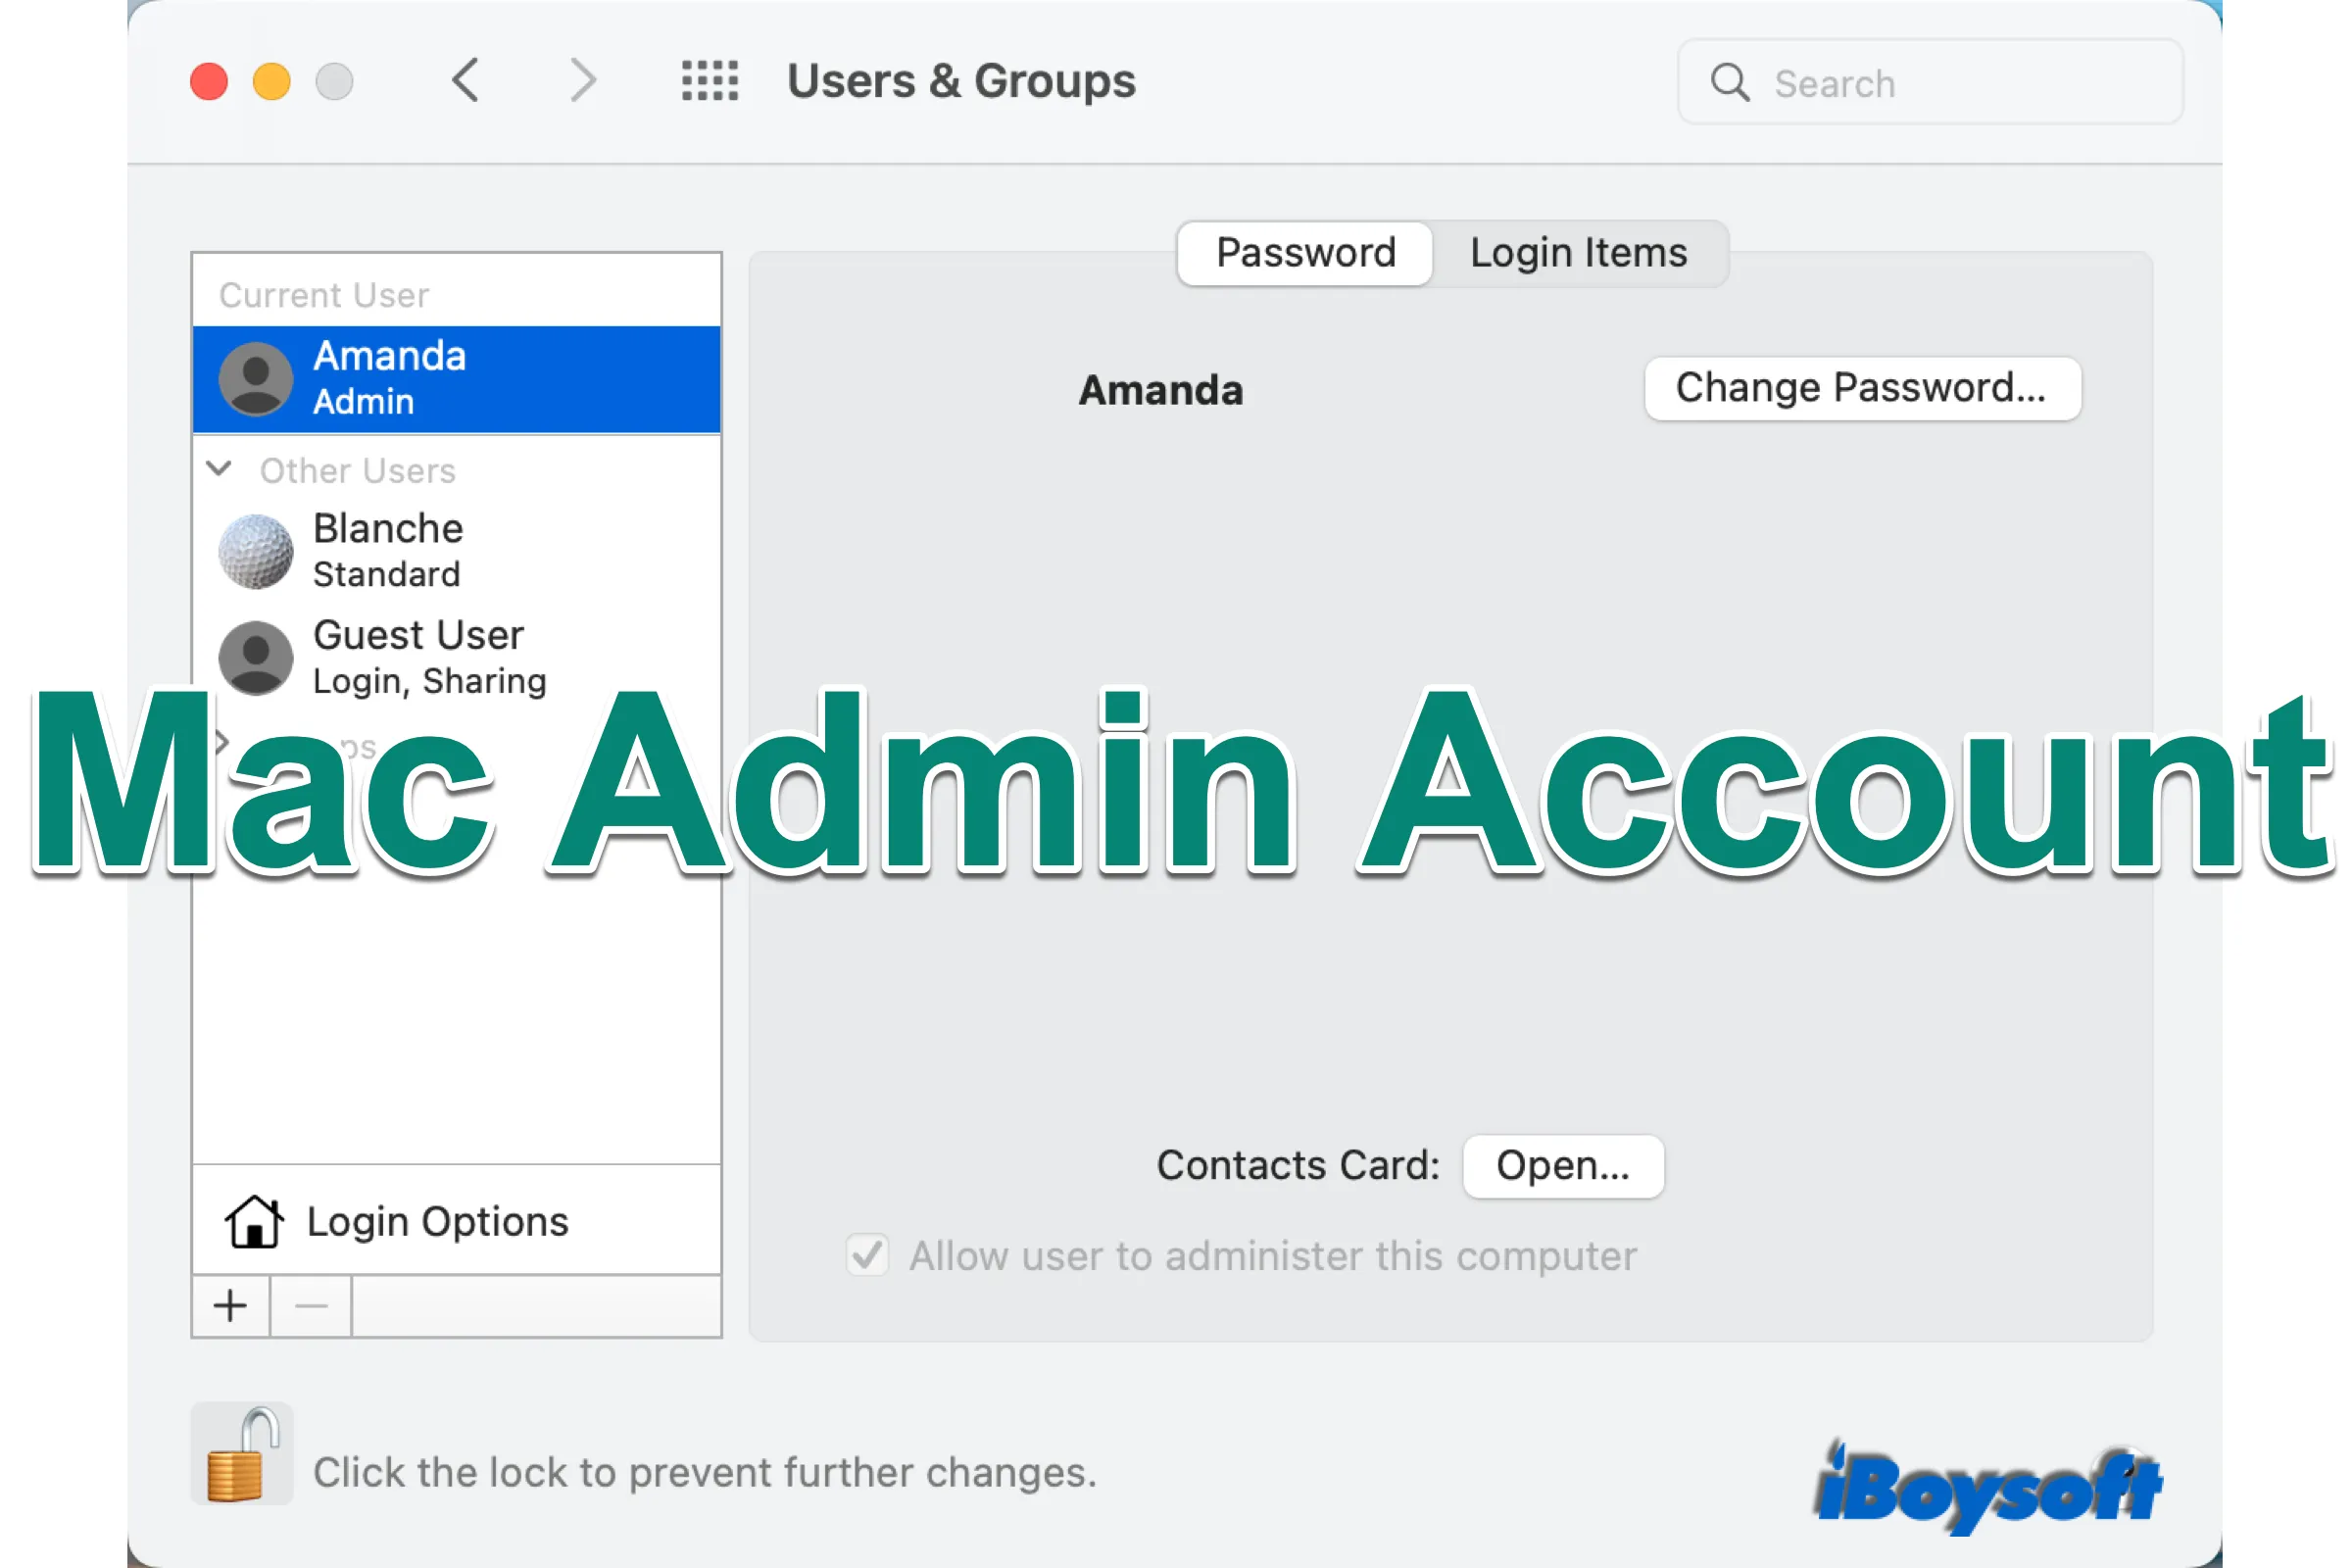 Mac Admin Account